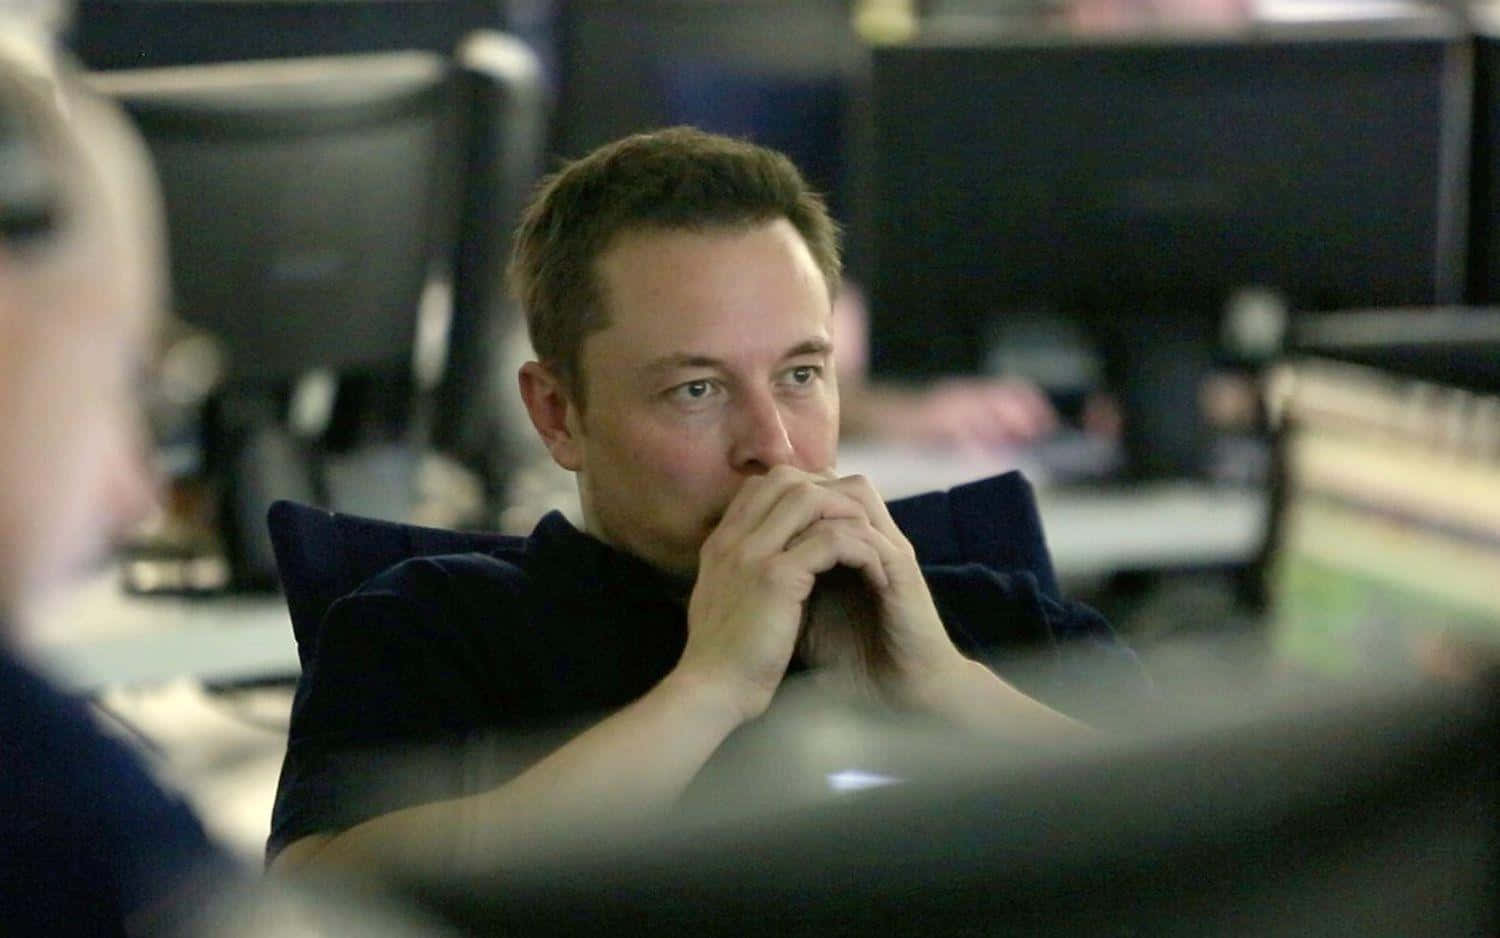 Elon Musk, CEO of Tesla&SpaceX